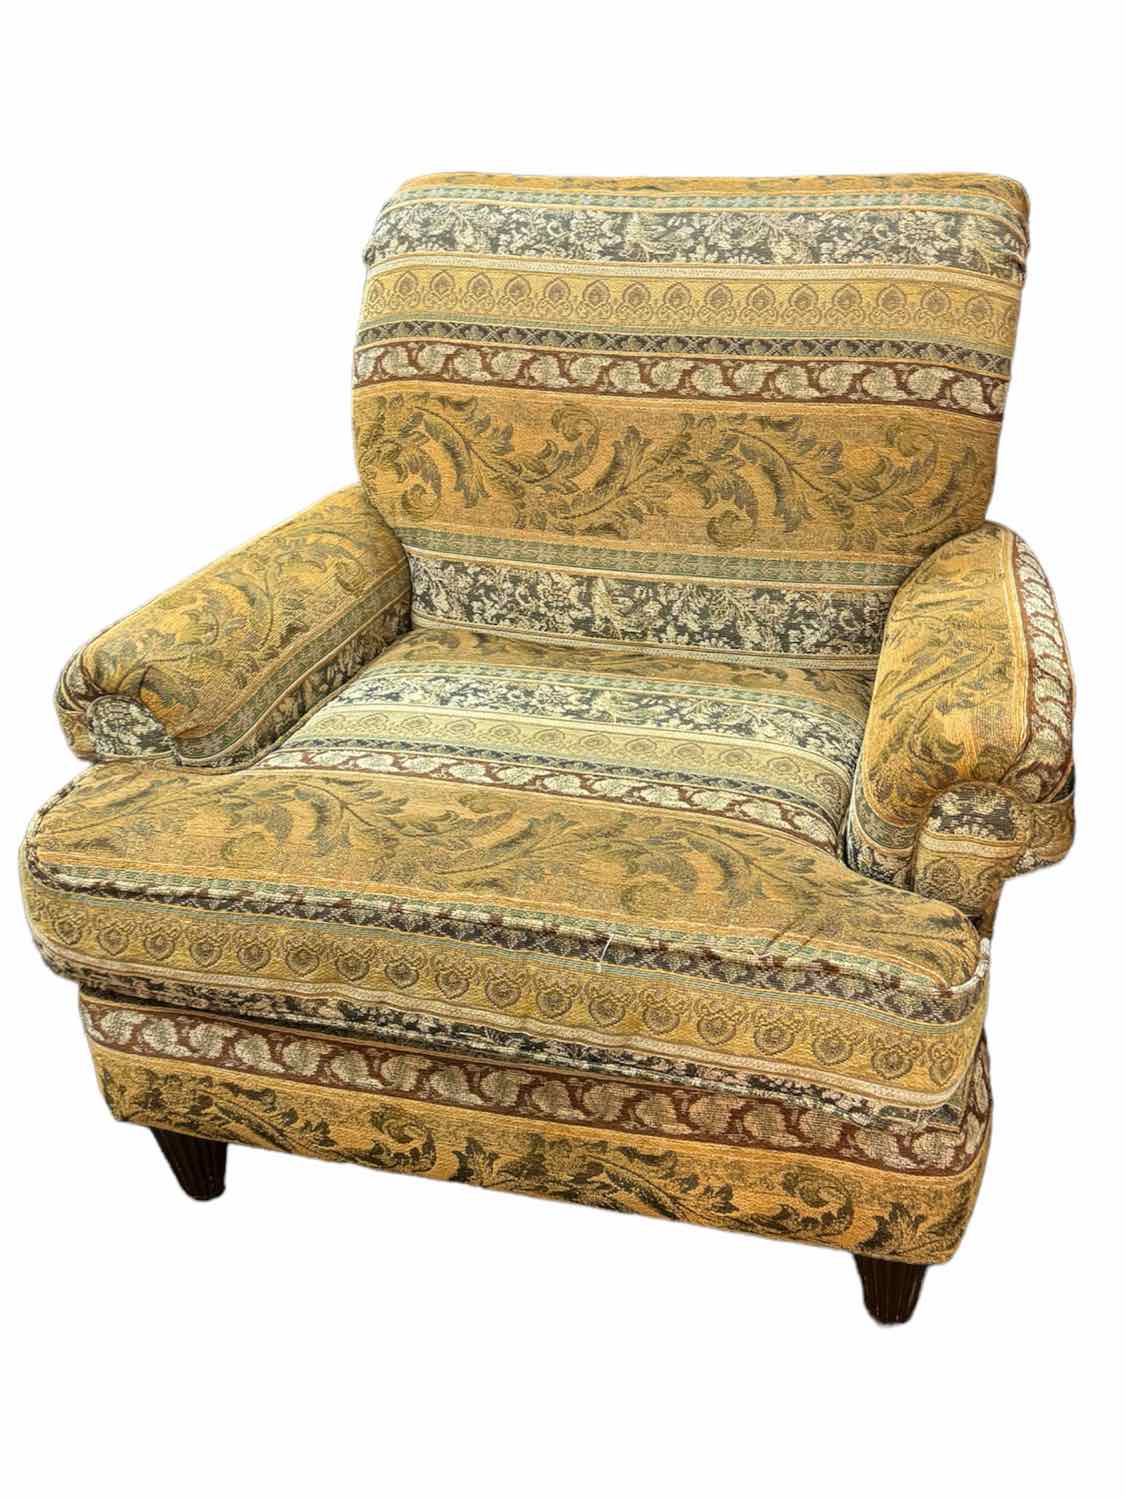 Alan White Upholstered Chair